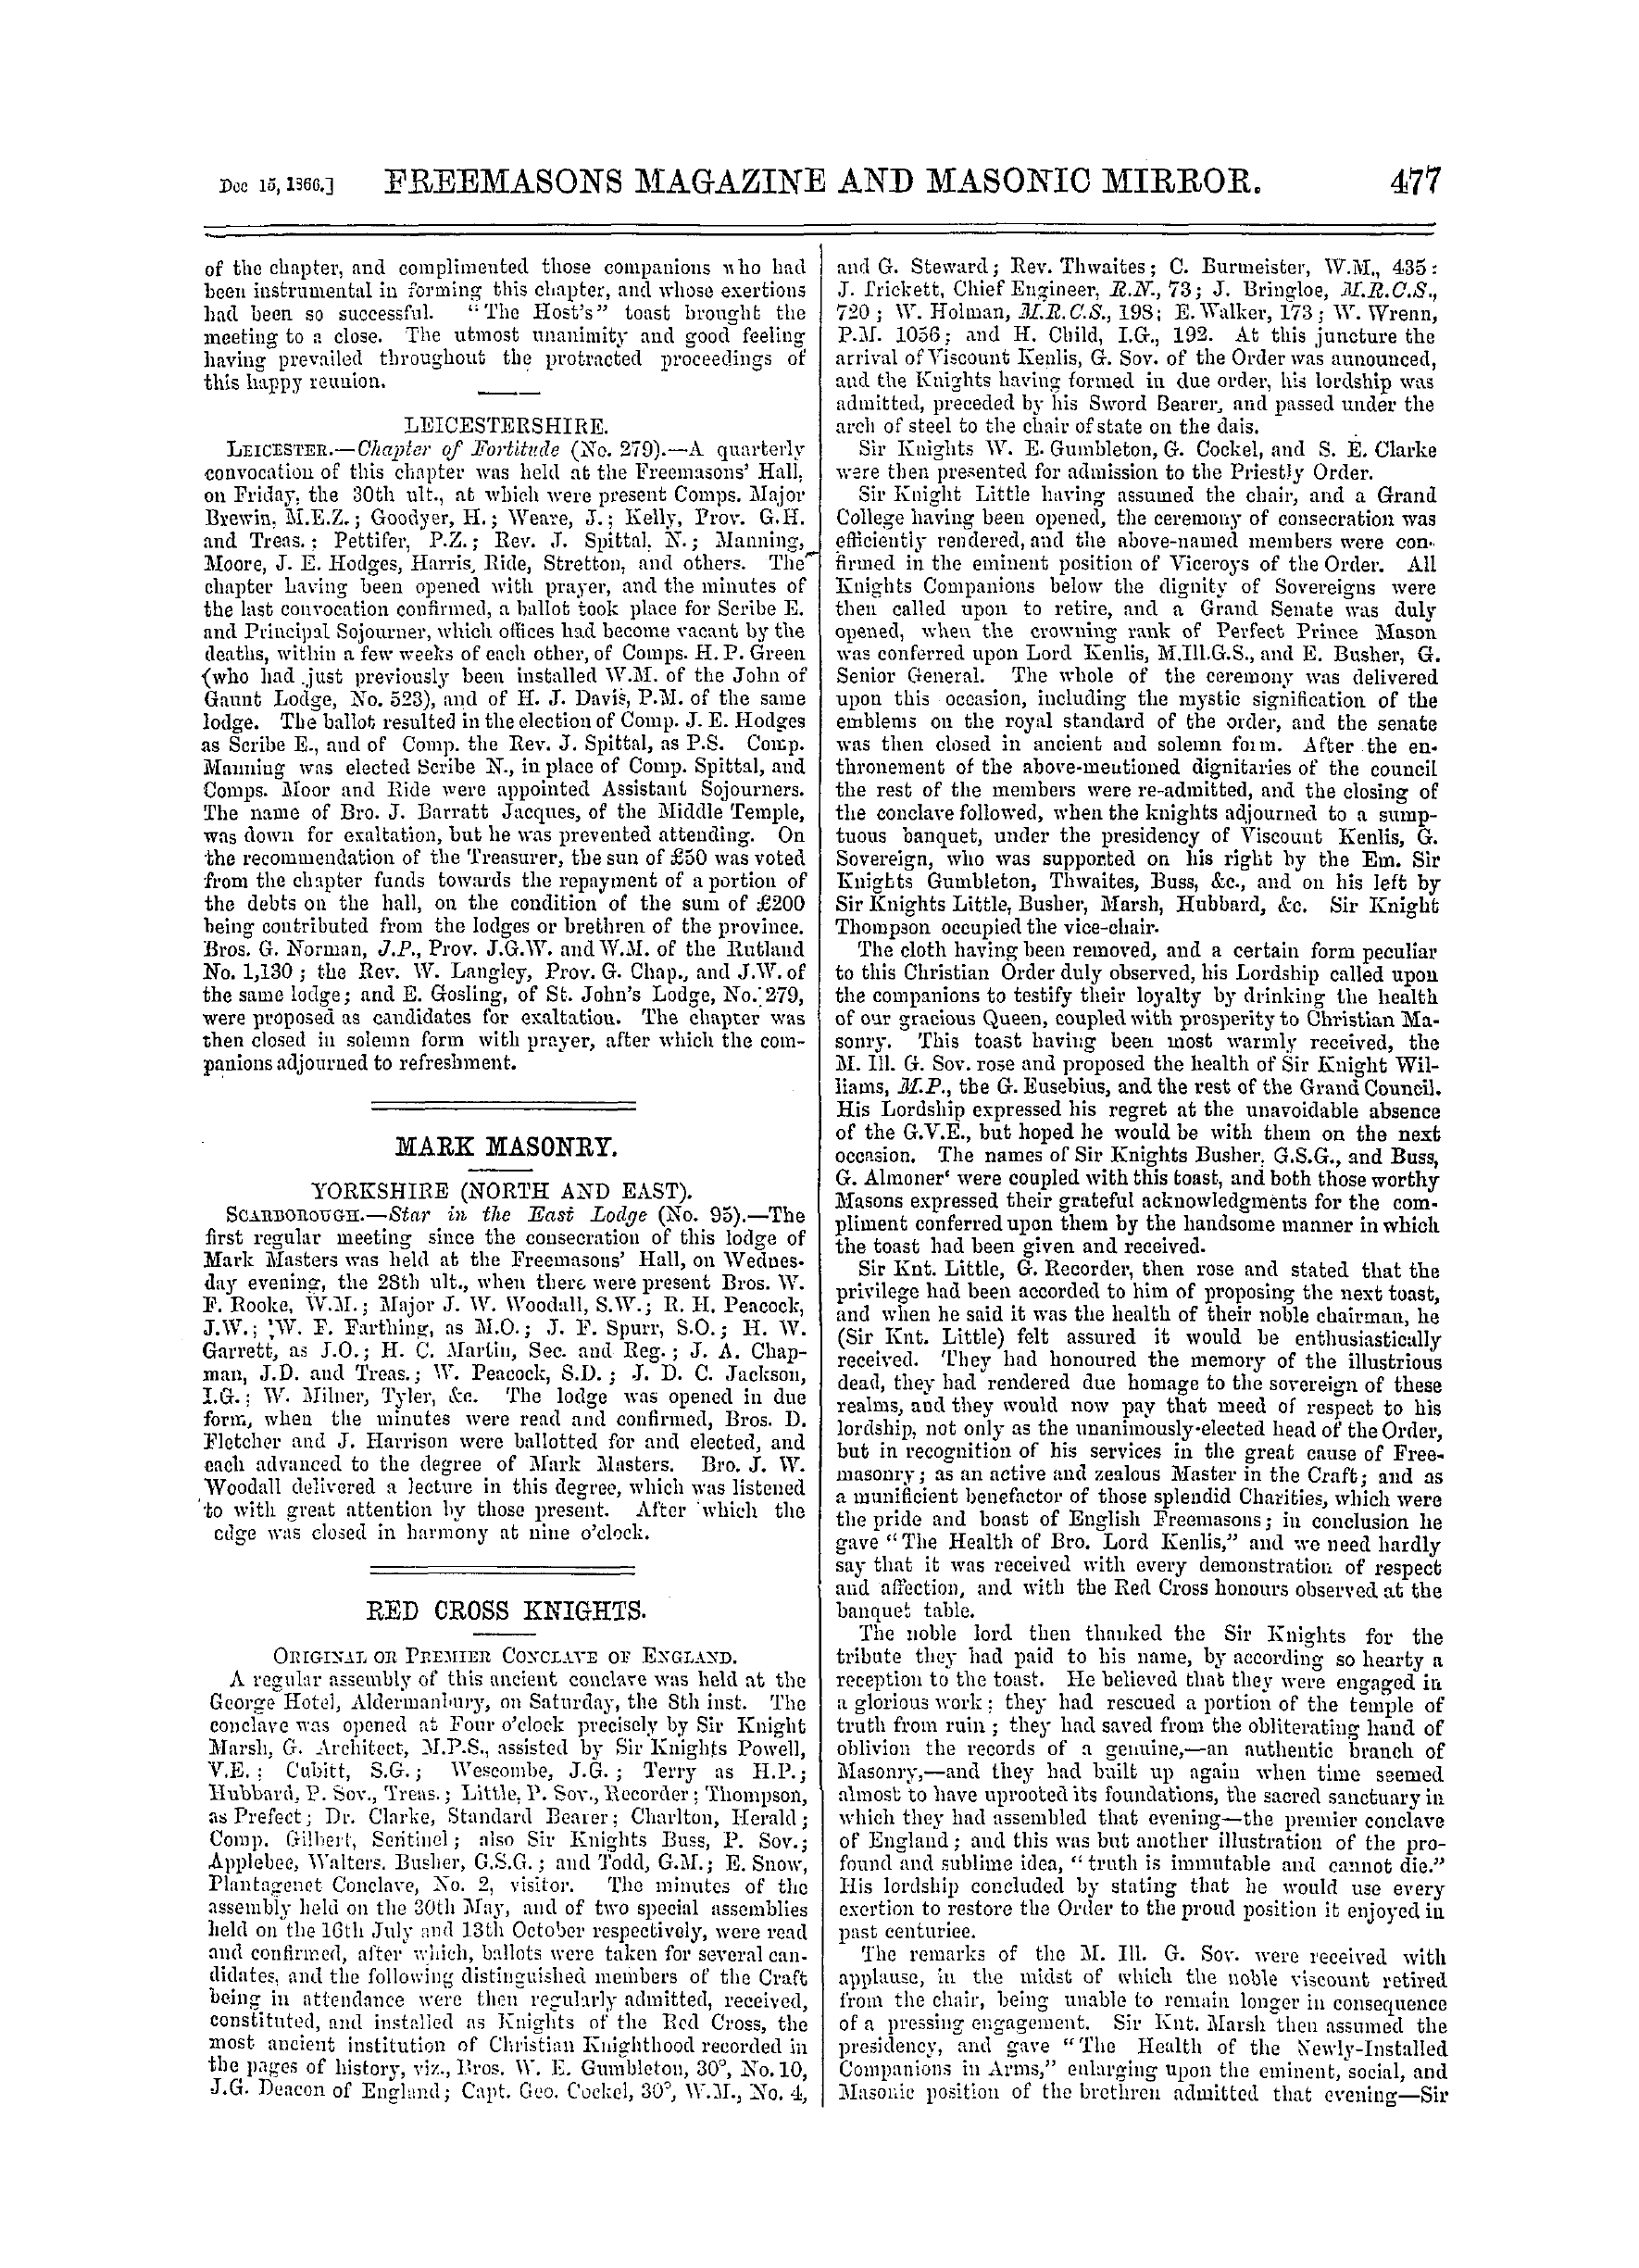 The Freemasons' Monthly Magazine: 1866-12-15 - Red Cross Knights.